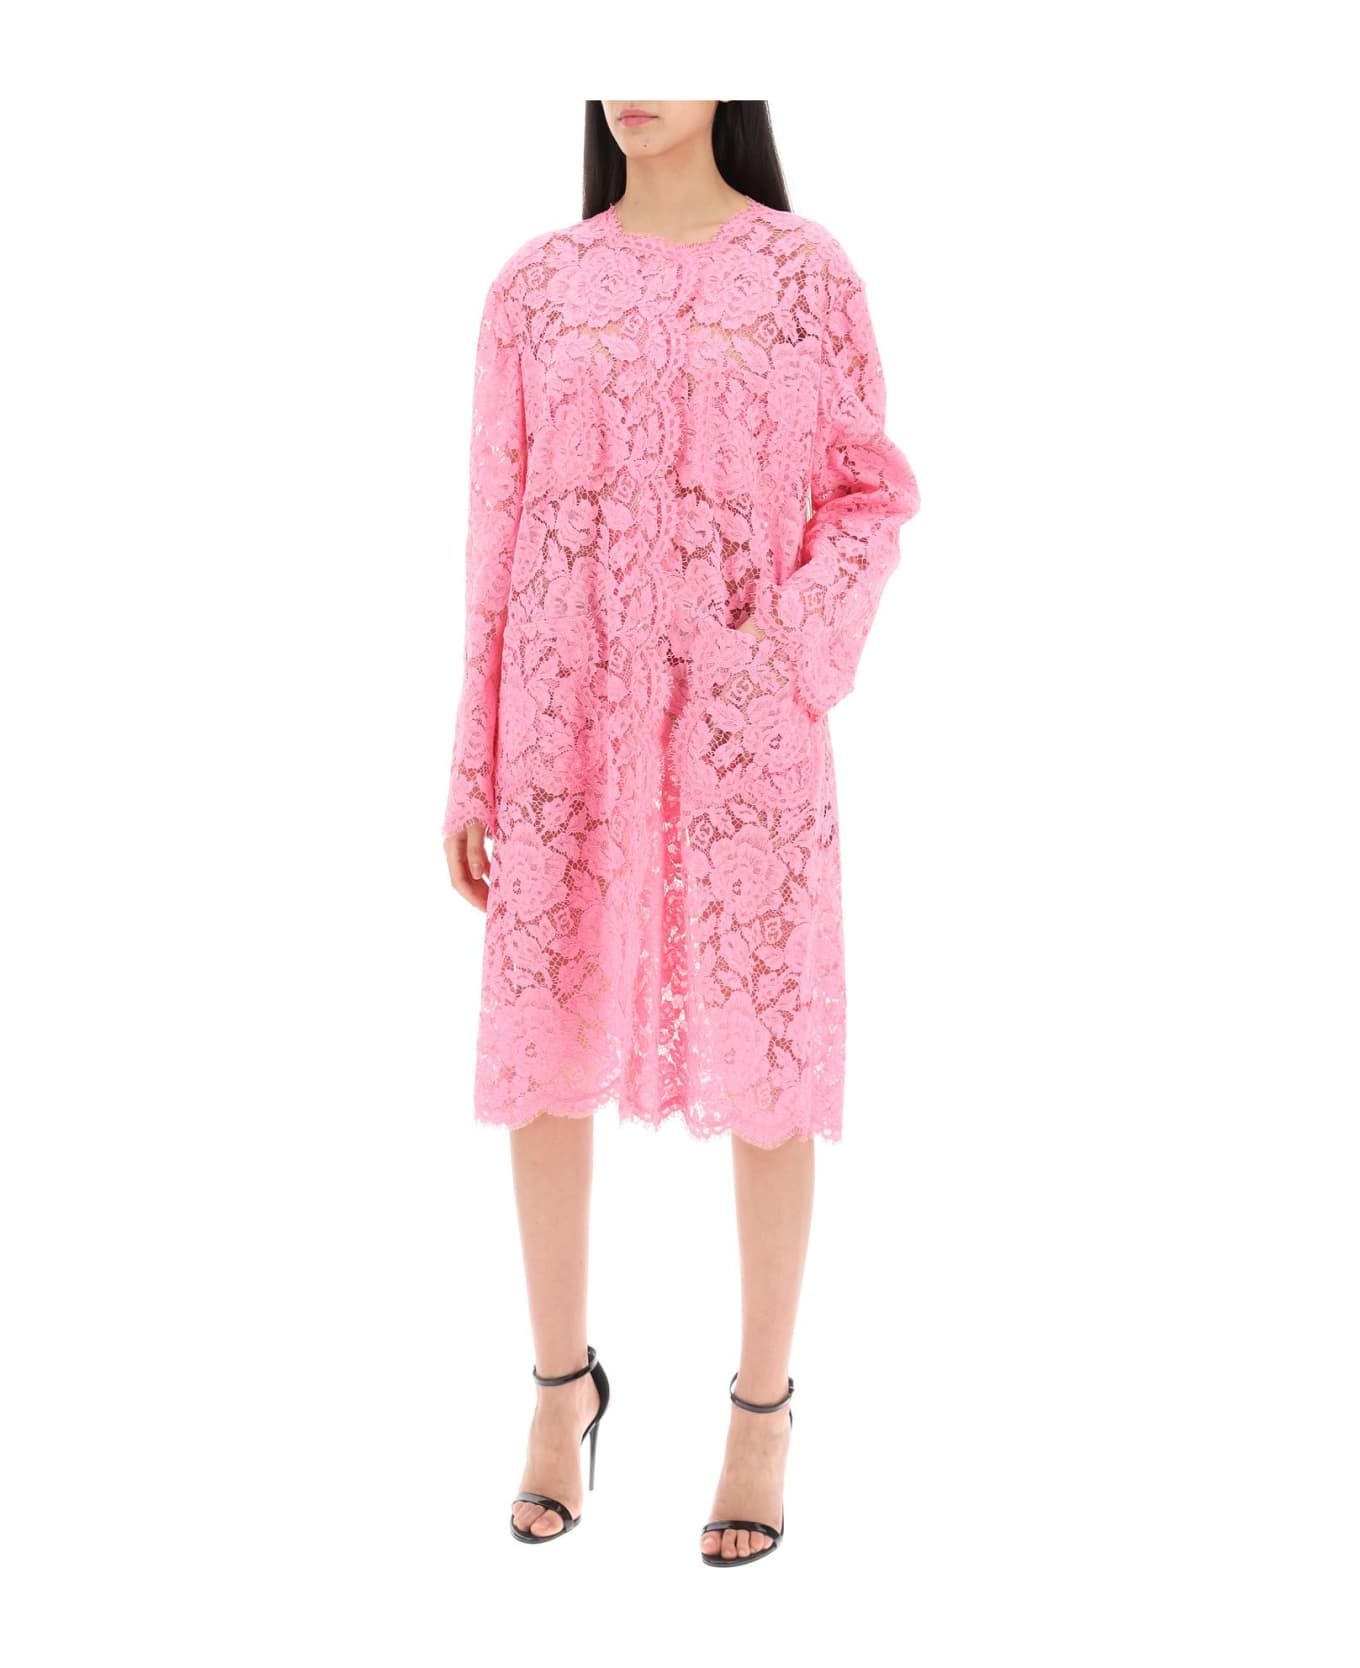 Dolce & Gabbana Dust Coat In Floral Cordonnet Lace - ROSA 2 (Pink)